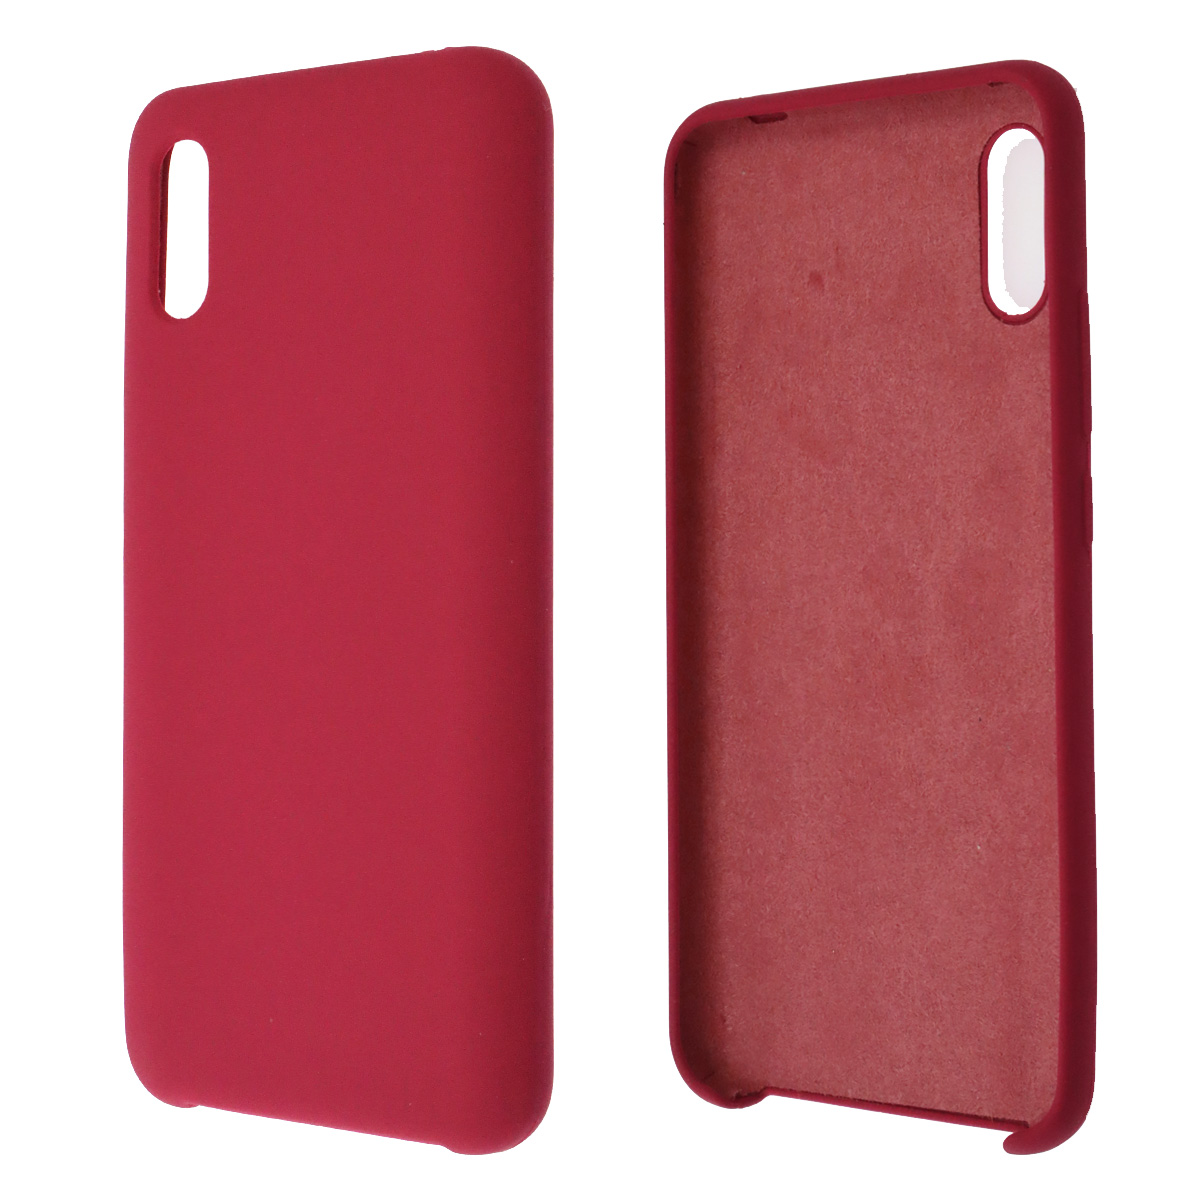 Чехол накладка Silicon Cover для XIAOMI Redmi 9A, силикон, бархат, цвет малиновый